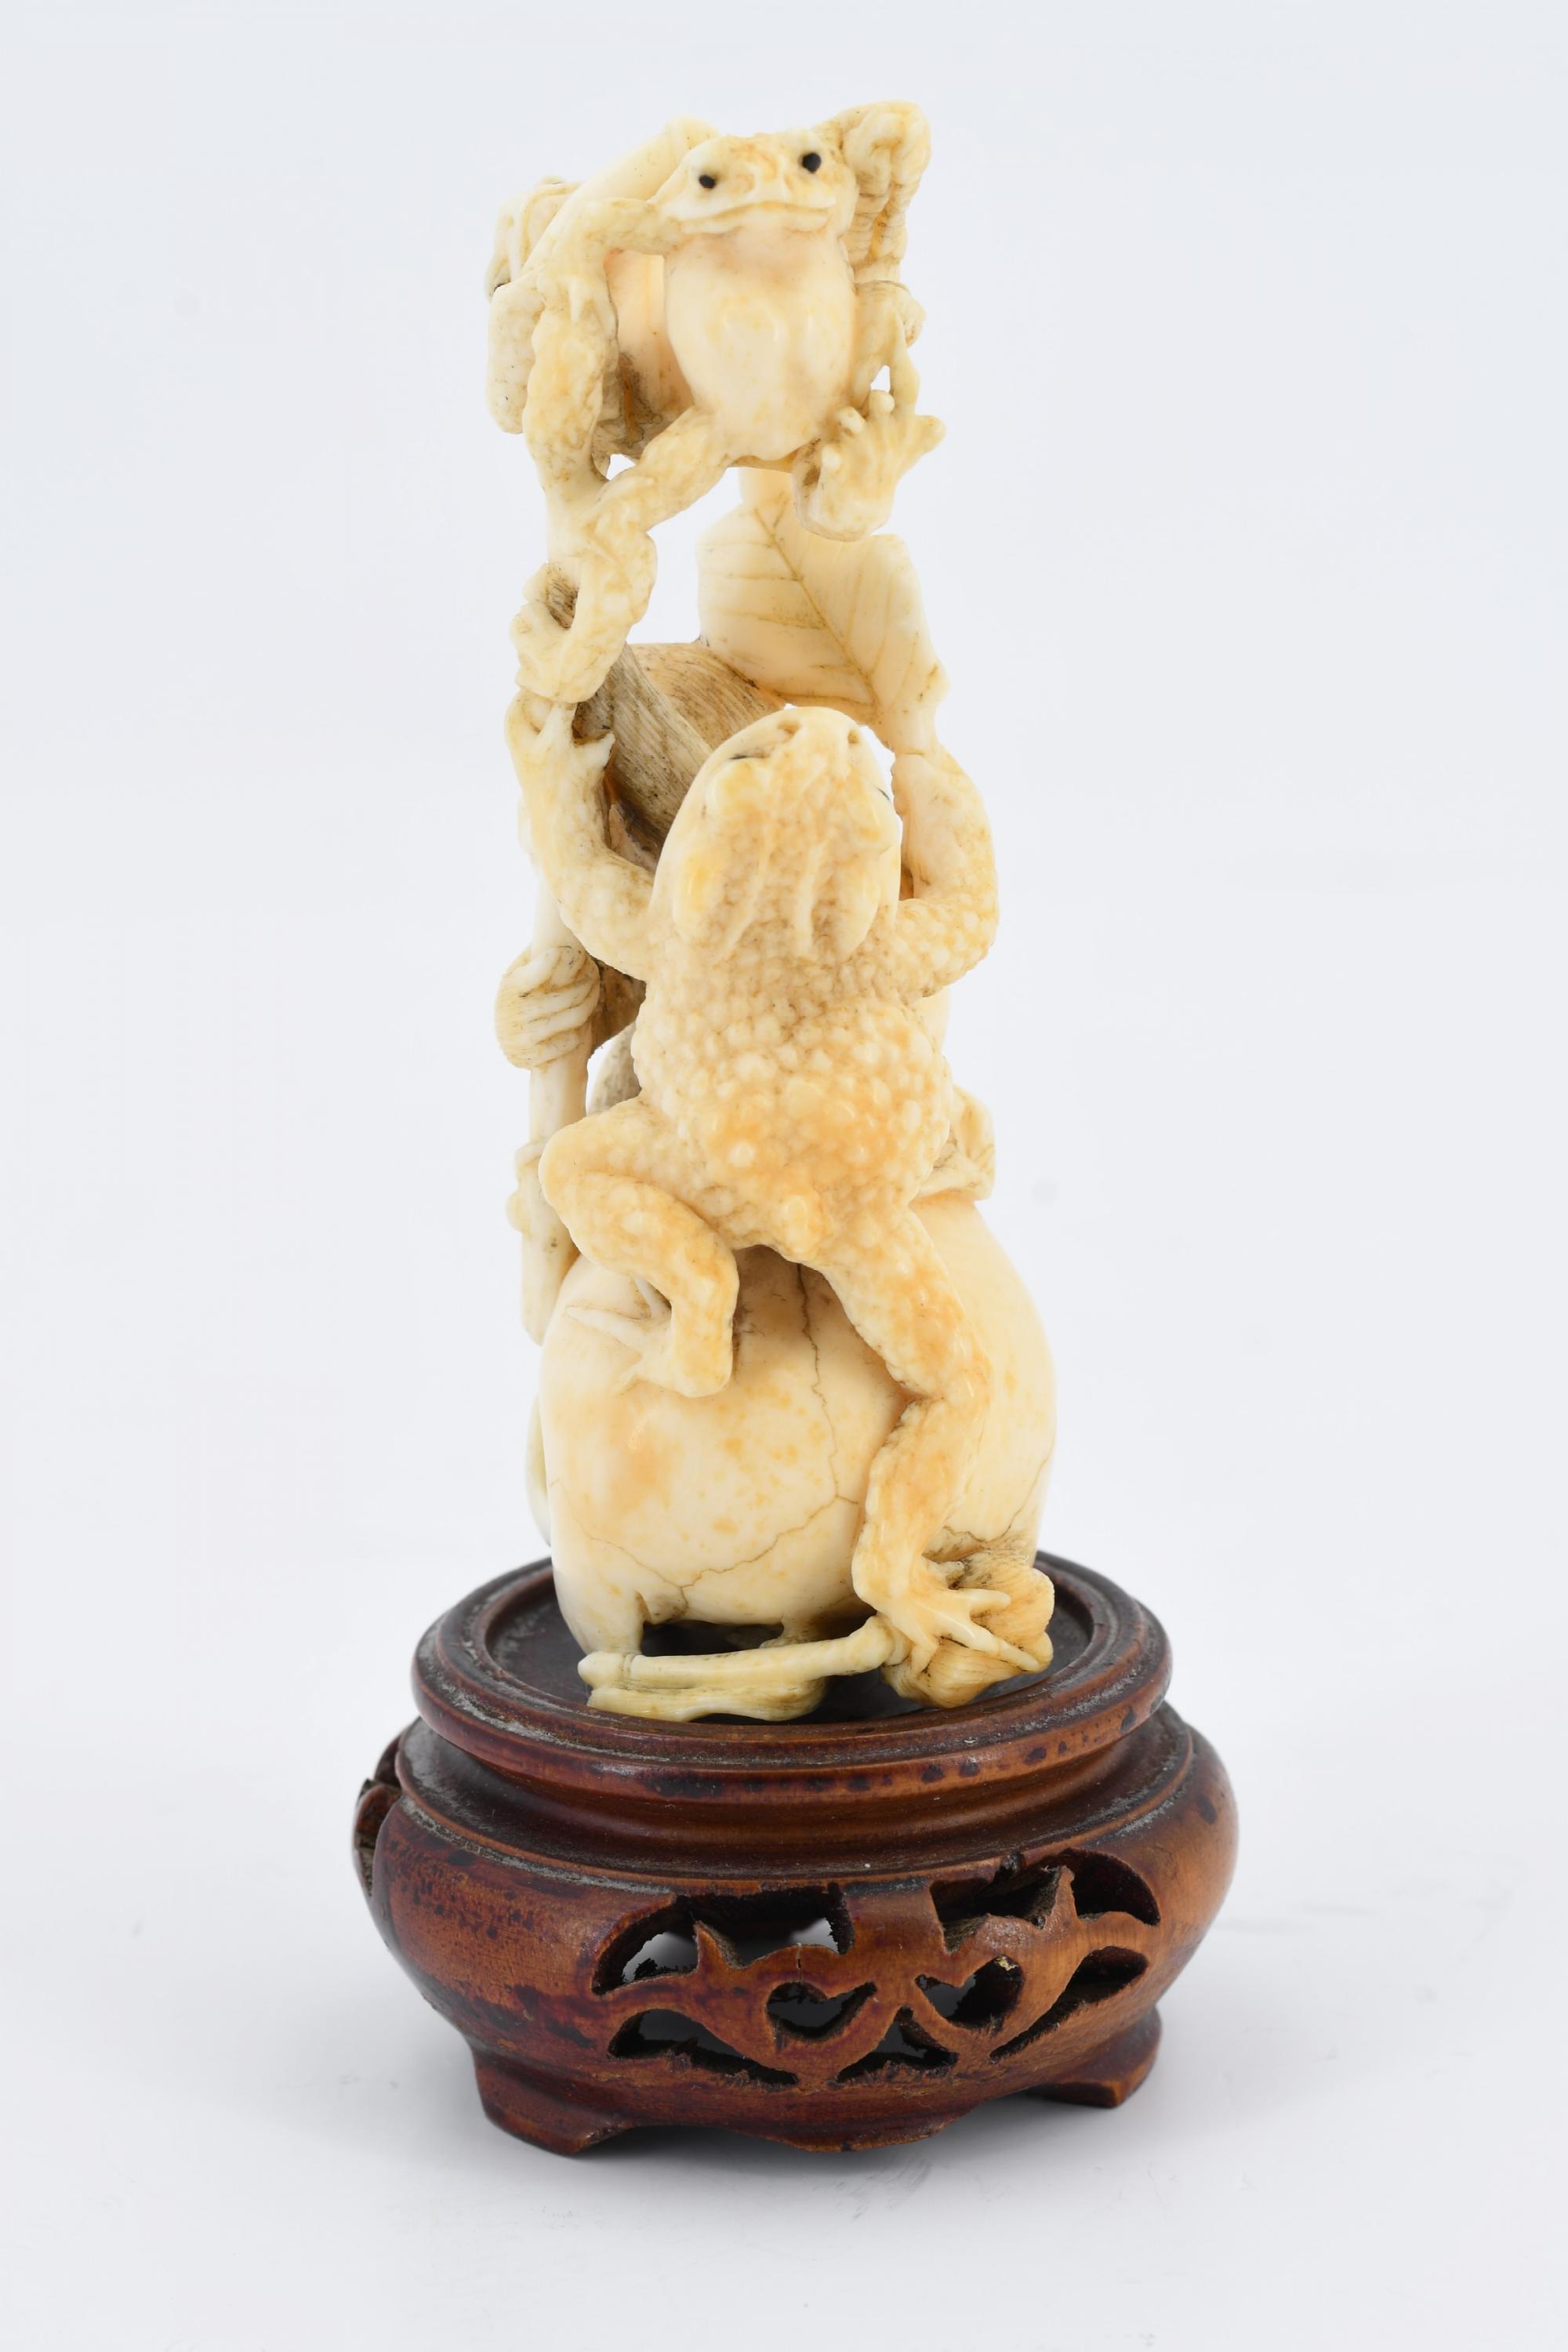 Ivory okimono with monkey and frogs on skull - Image 4 of 6